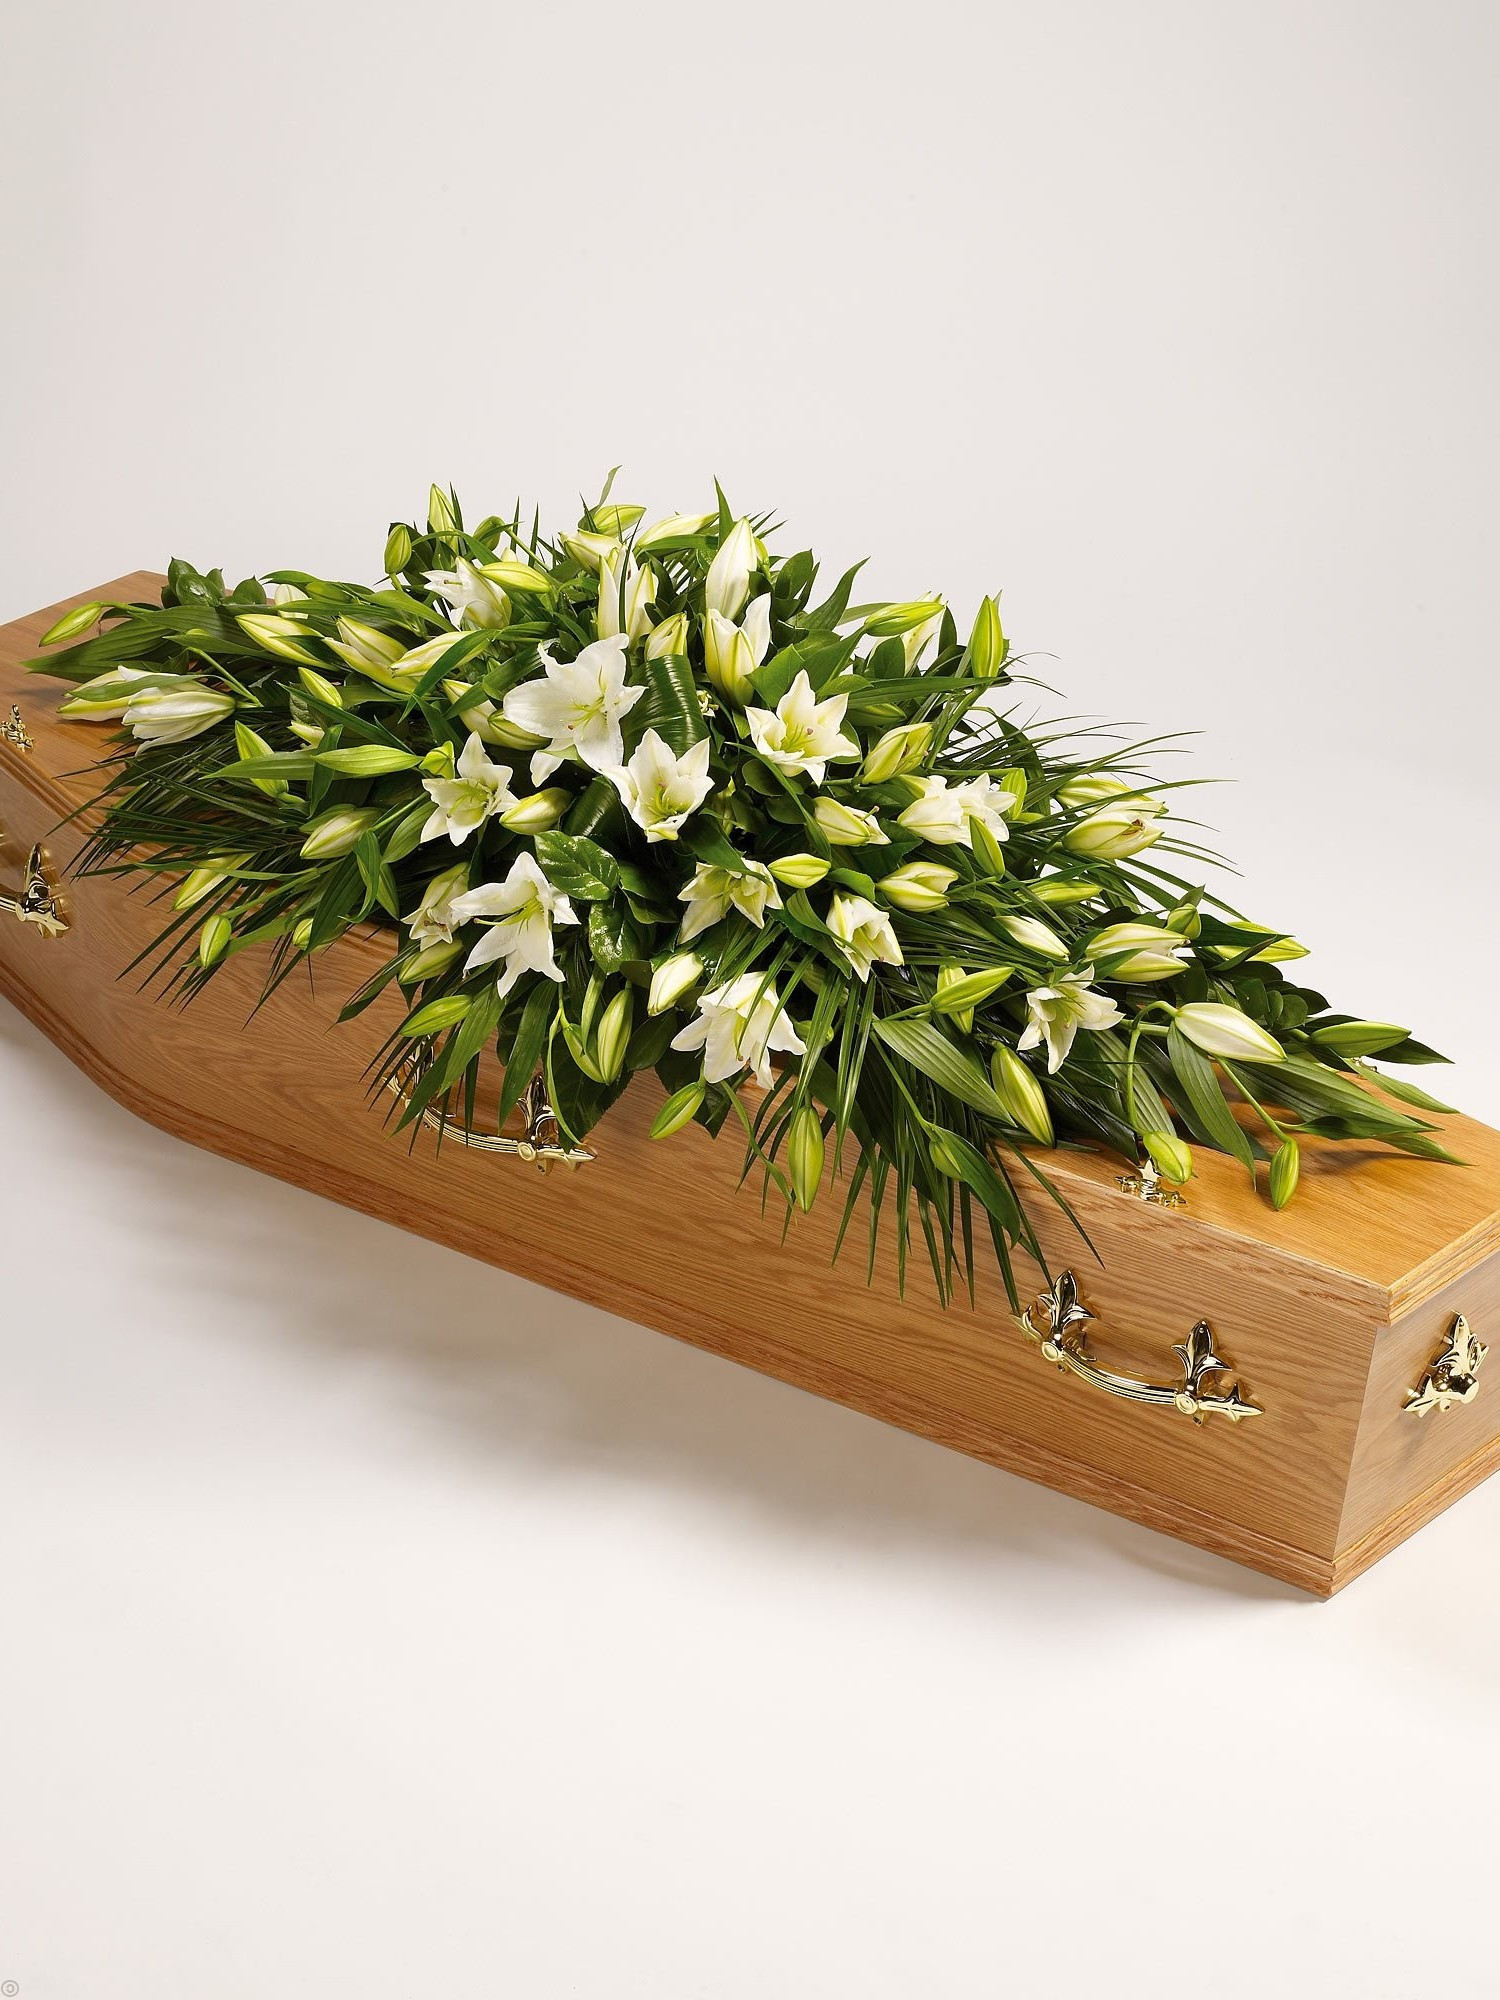 Coffin flowers photos